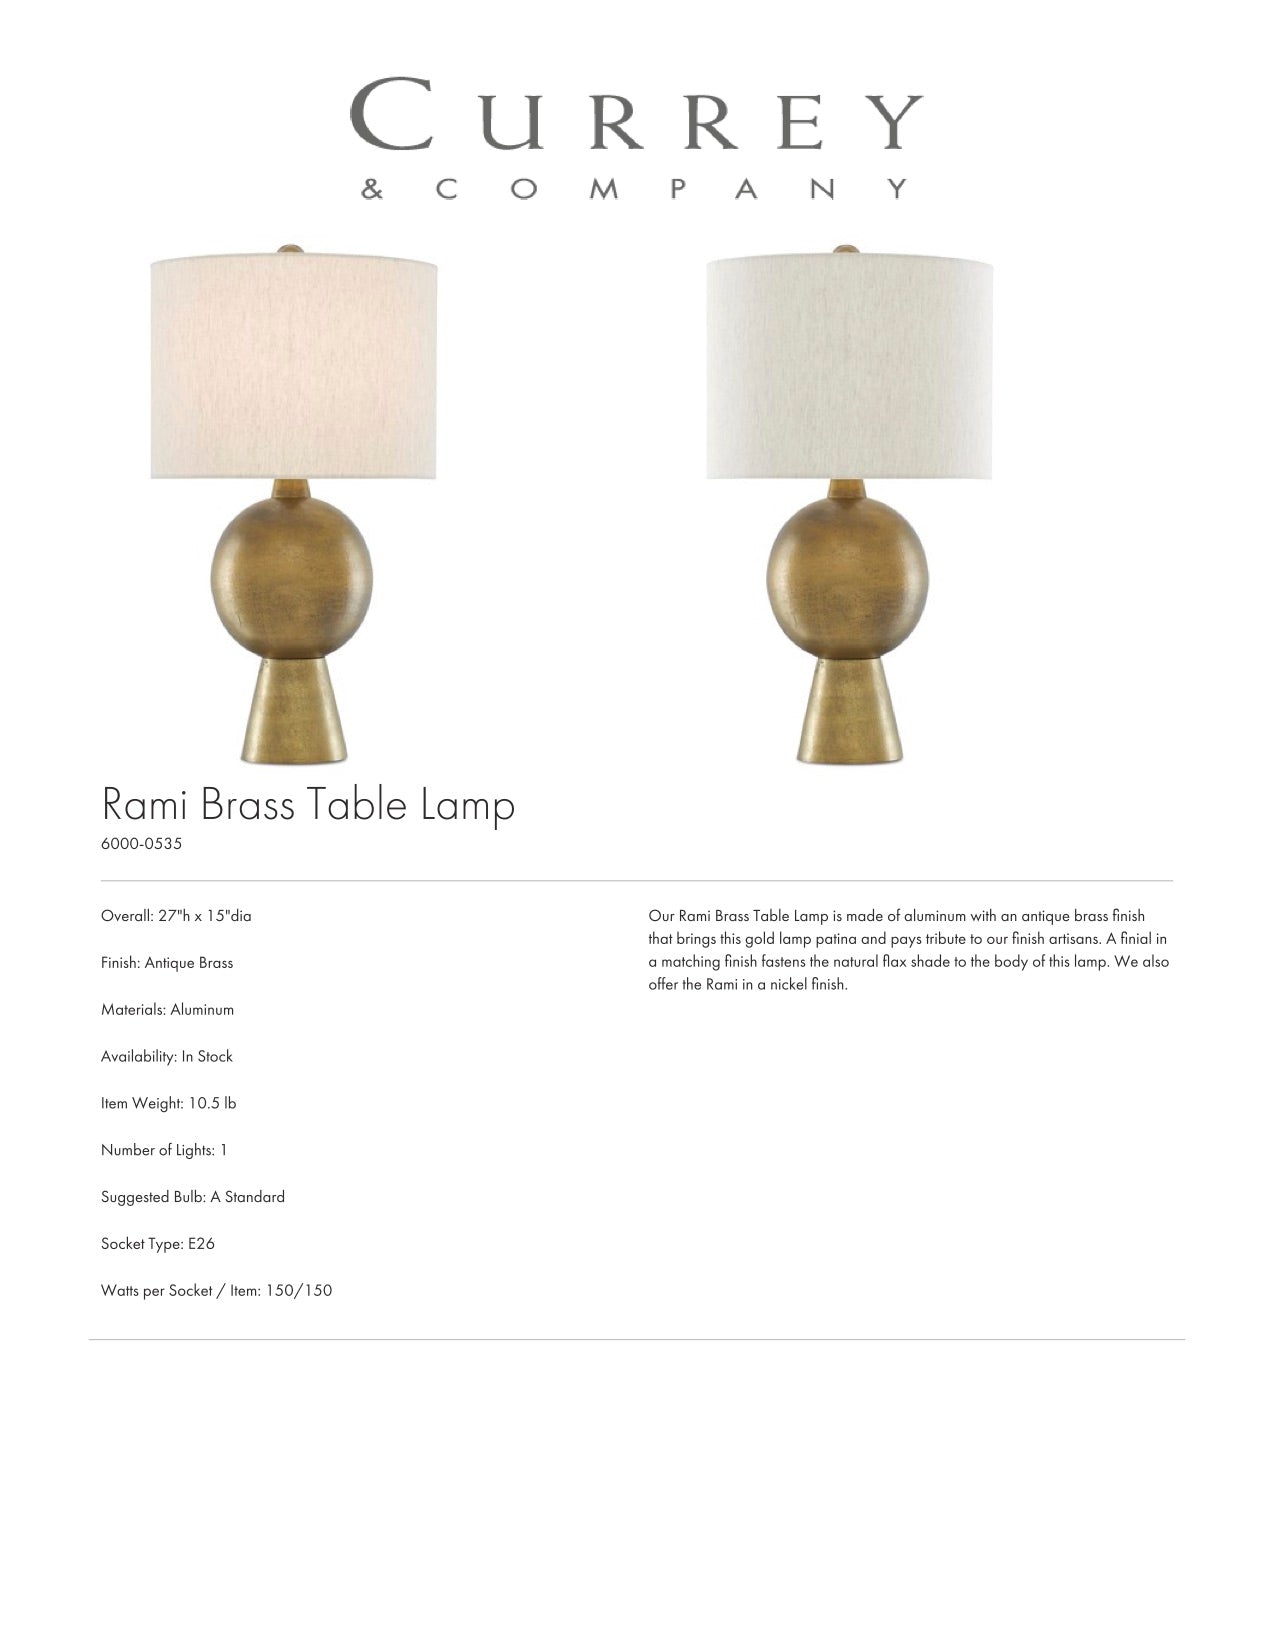 Currey & Company Rami Brass Table Lamp Tearsheet